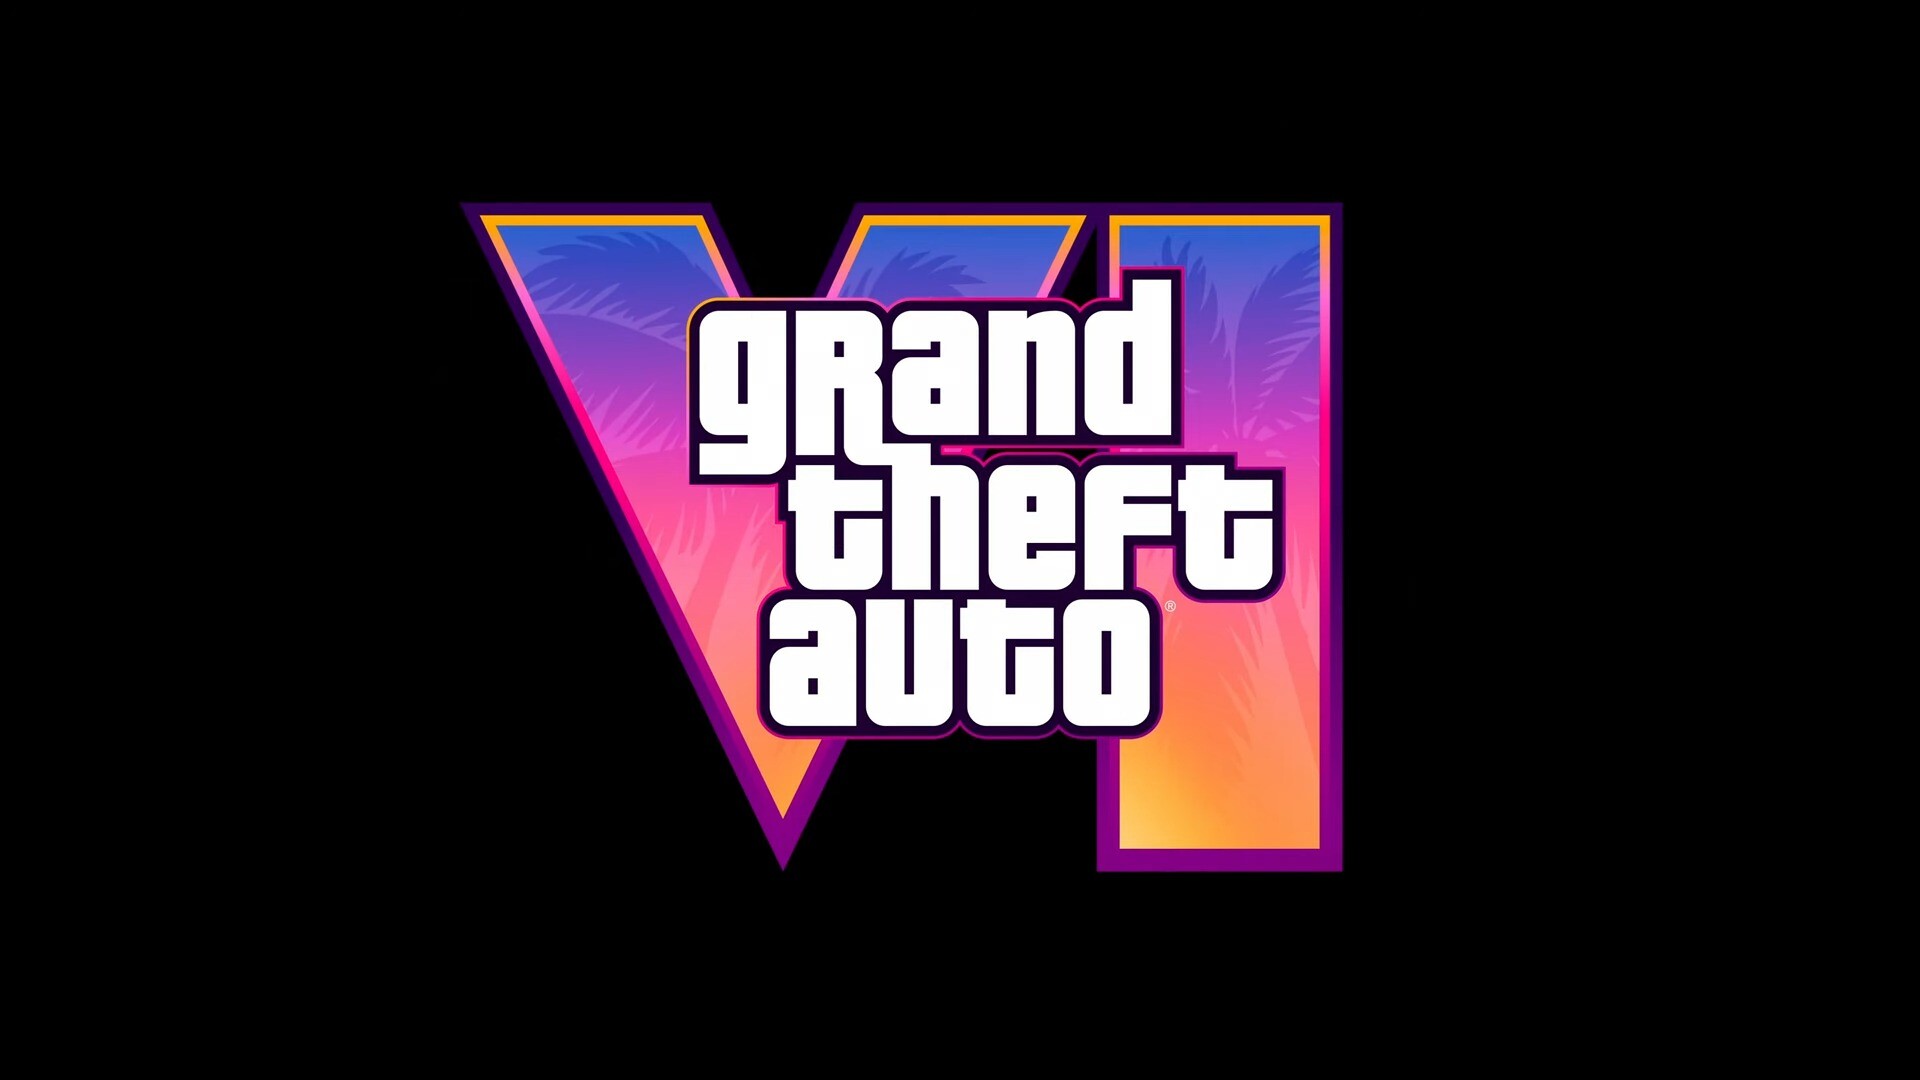 Трейлер Grand Theft Auto VI отлично встретили игроки - лайков в 33 раза больше дизлайков: с сайта NEWXBOXONE.RU